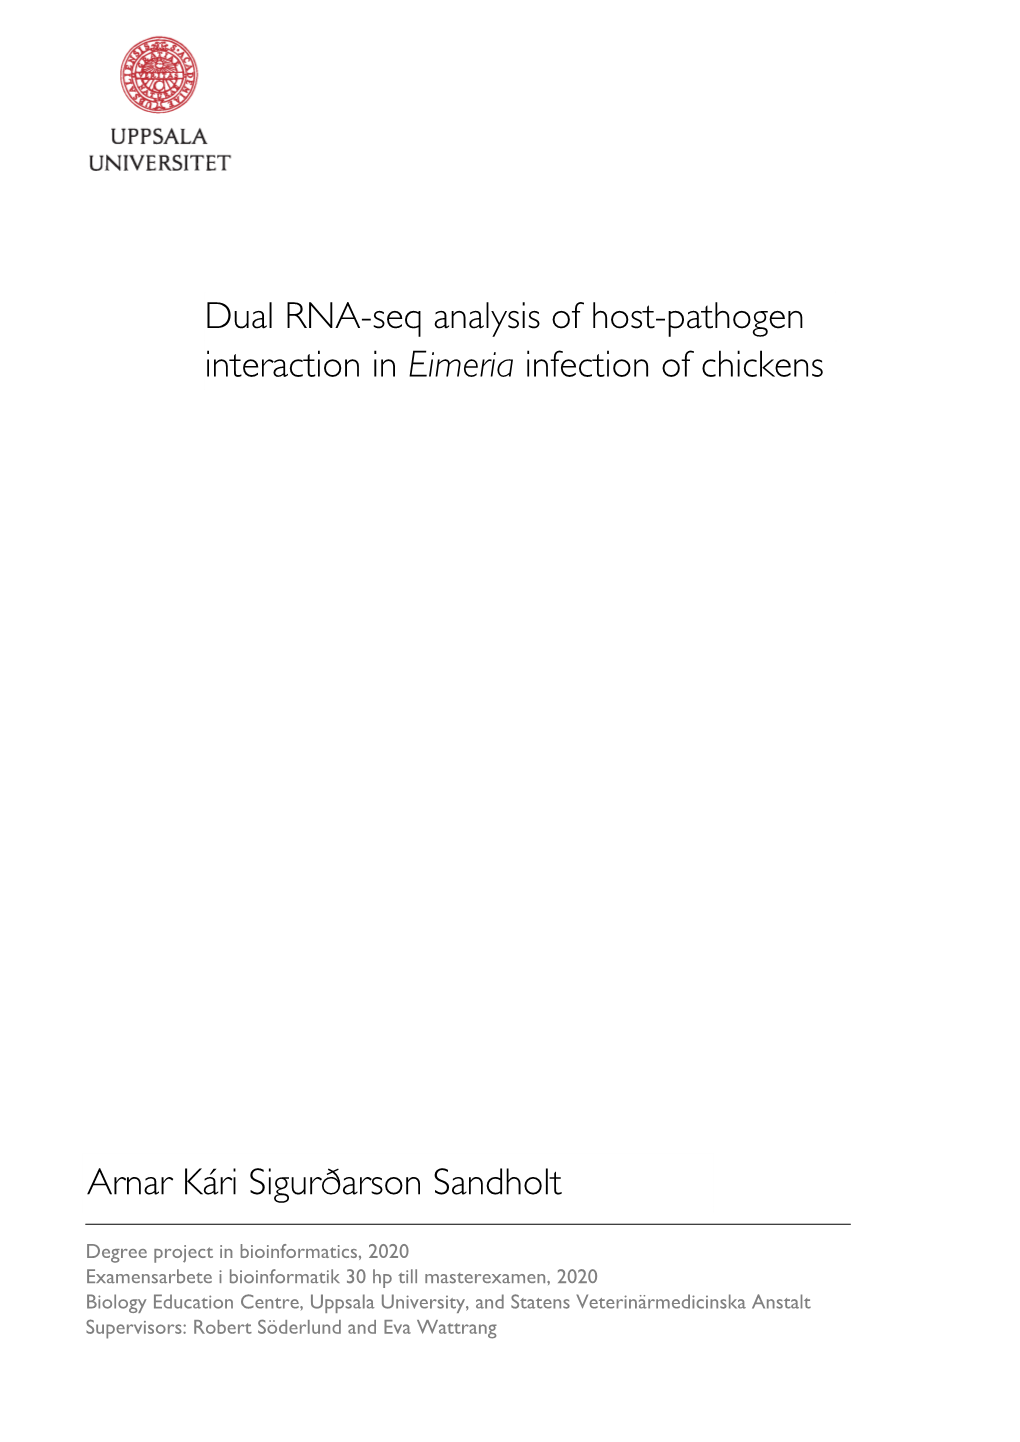 Dual RNA-Seq Analysis of Host-Pathogen Interaction in Eimeria Infection of Chickens